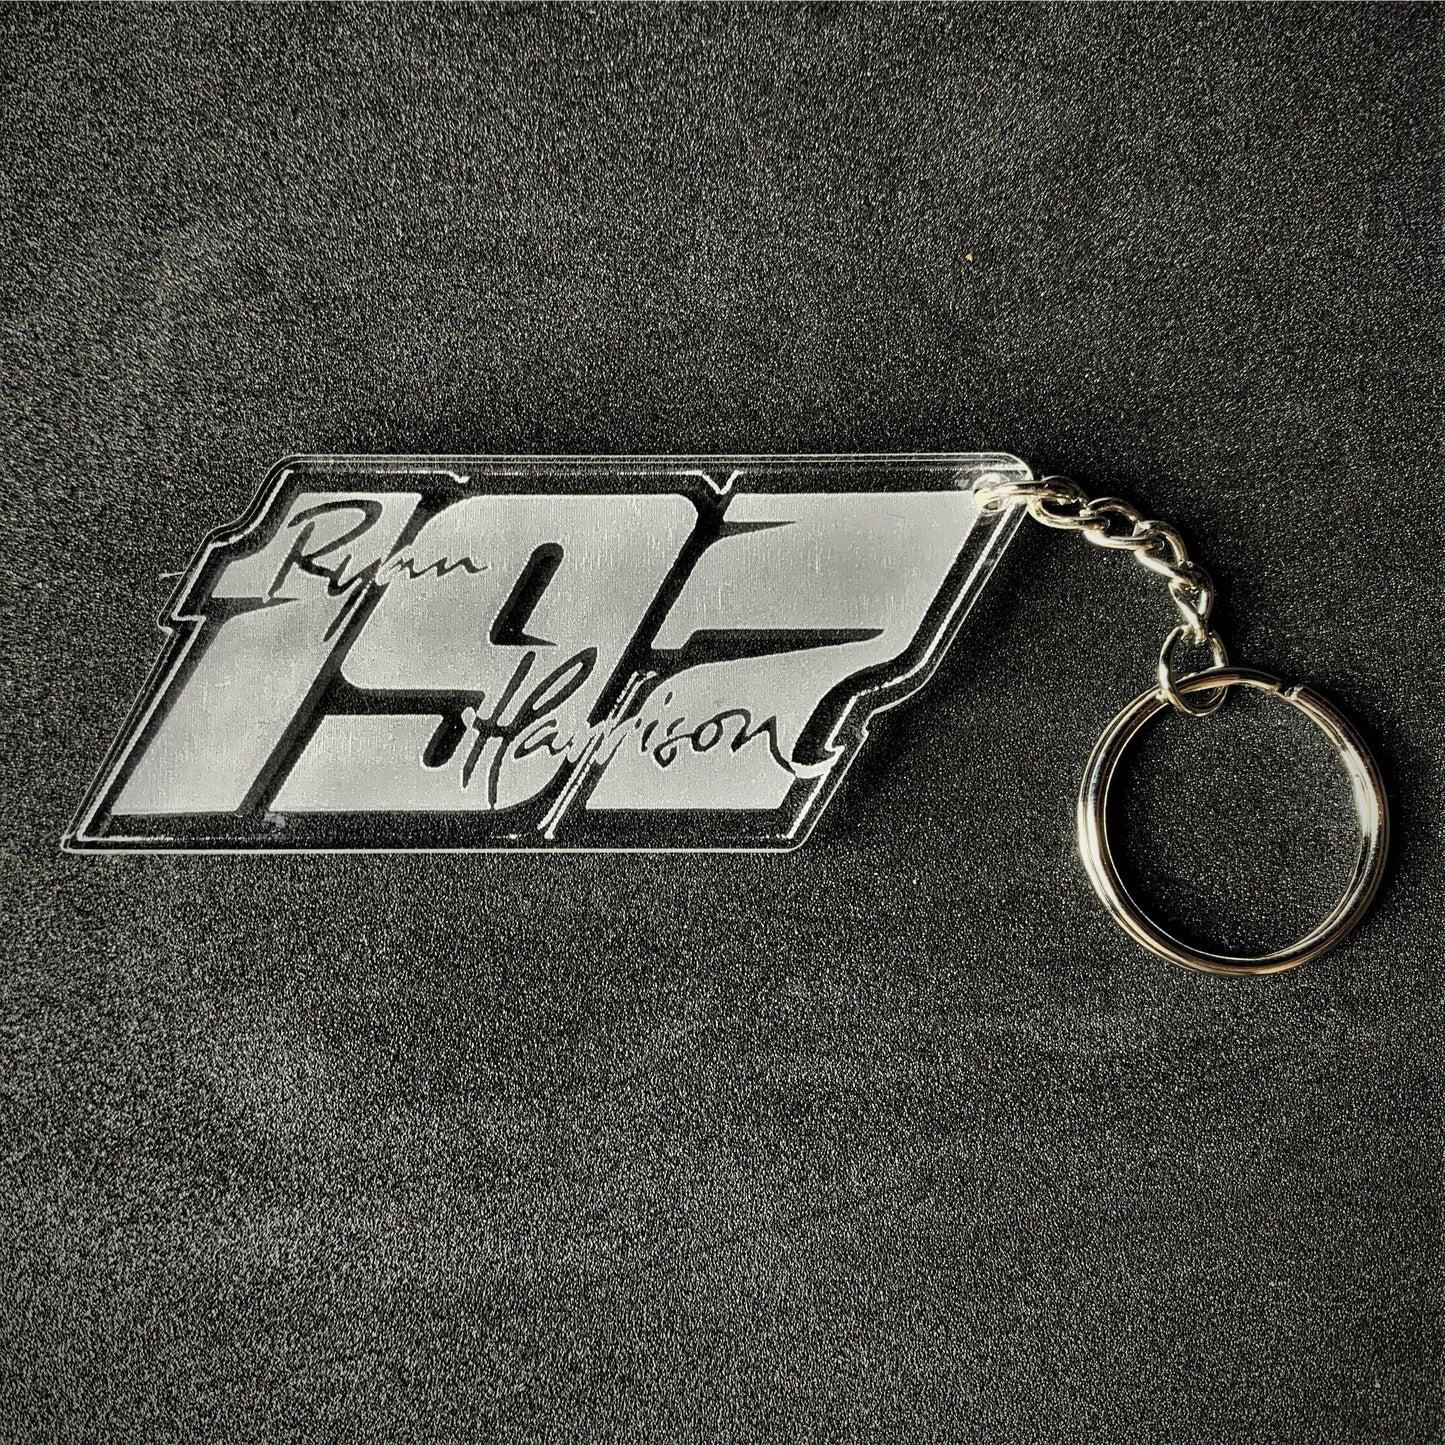 #197 Ryan Harrison Key Ring - Key Ring - Stock Car & Banger Toy Tracks